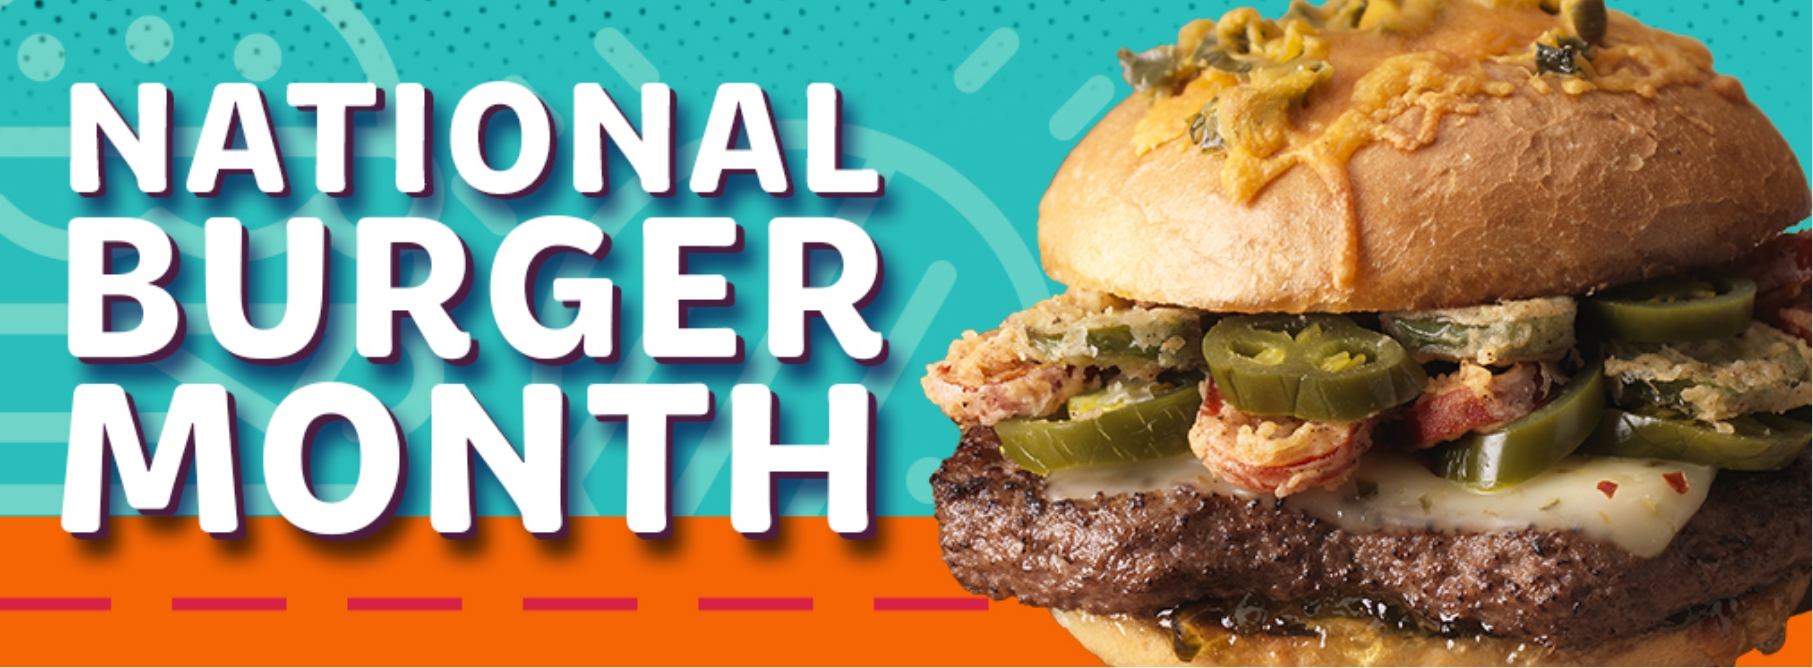 National Burger Month